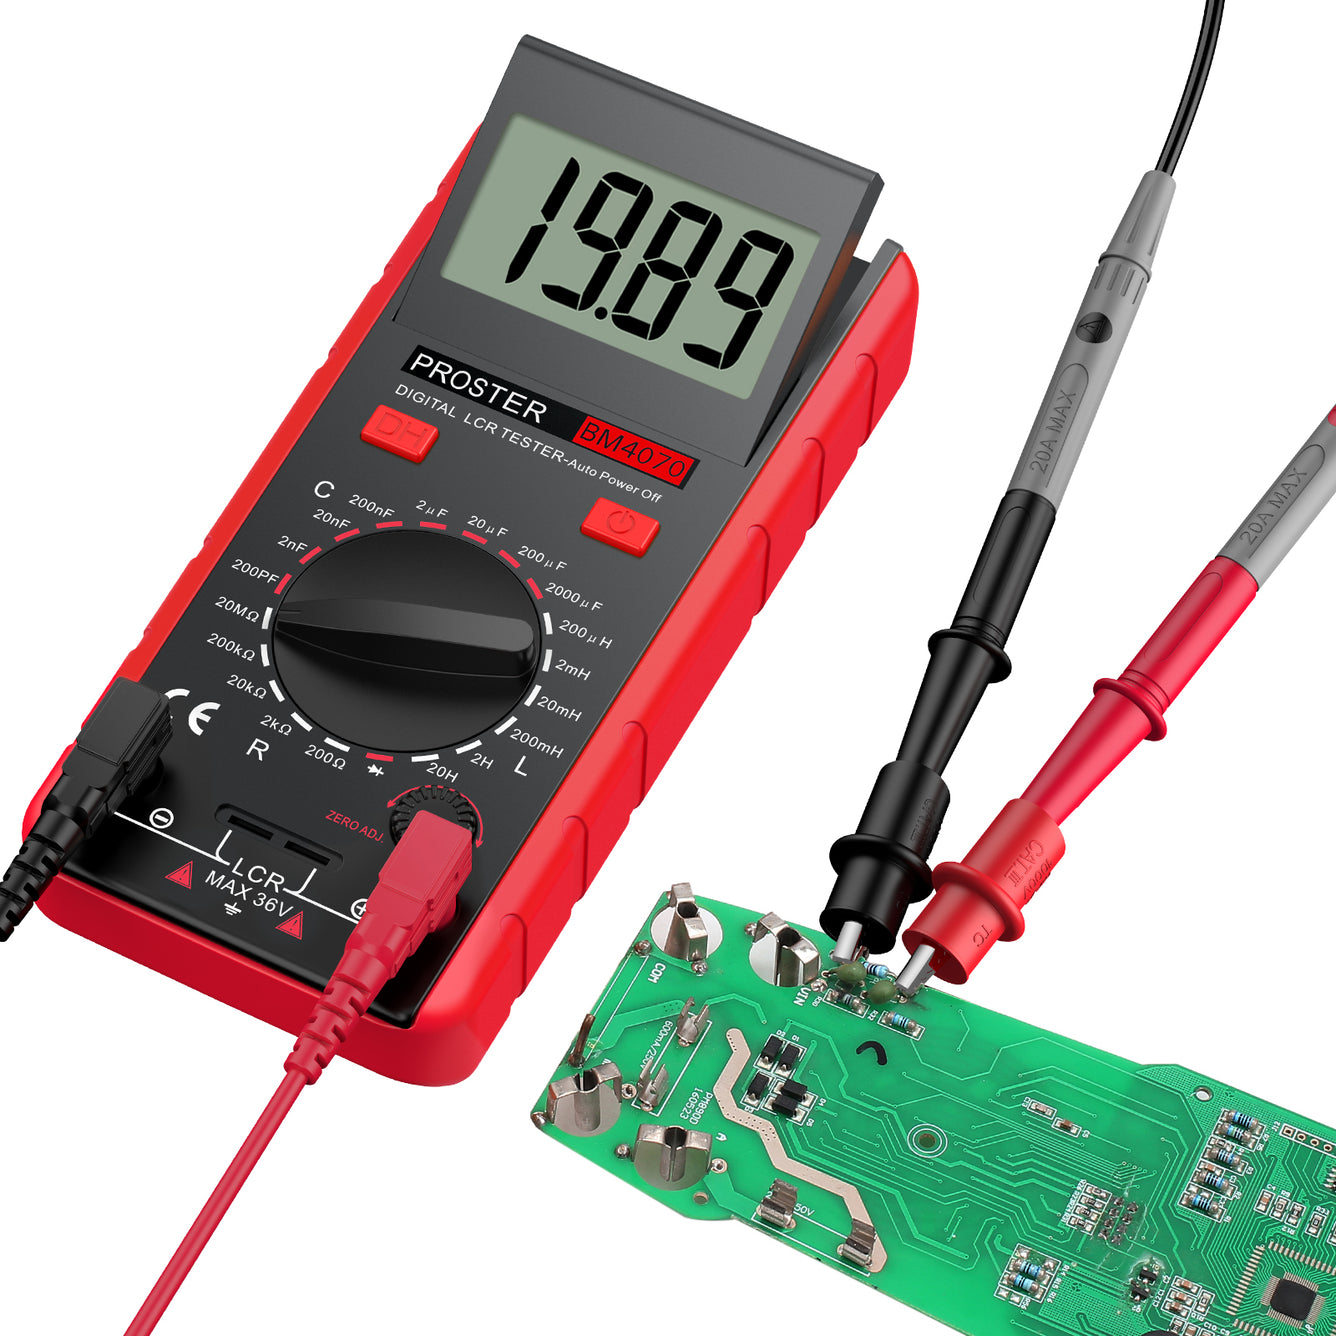 Proster LCR Meter Digital LCR Multimeter Capacitance Resistance Inductance  Measuring Meter with LCD Over-Range Display